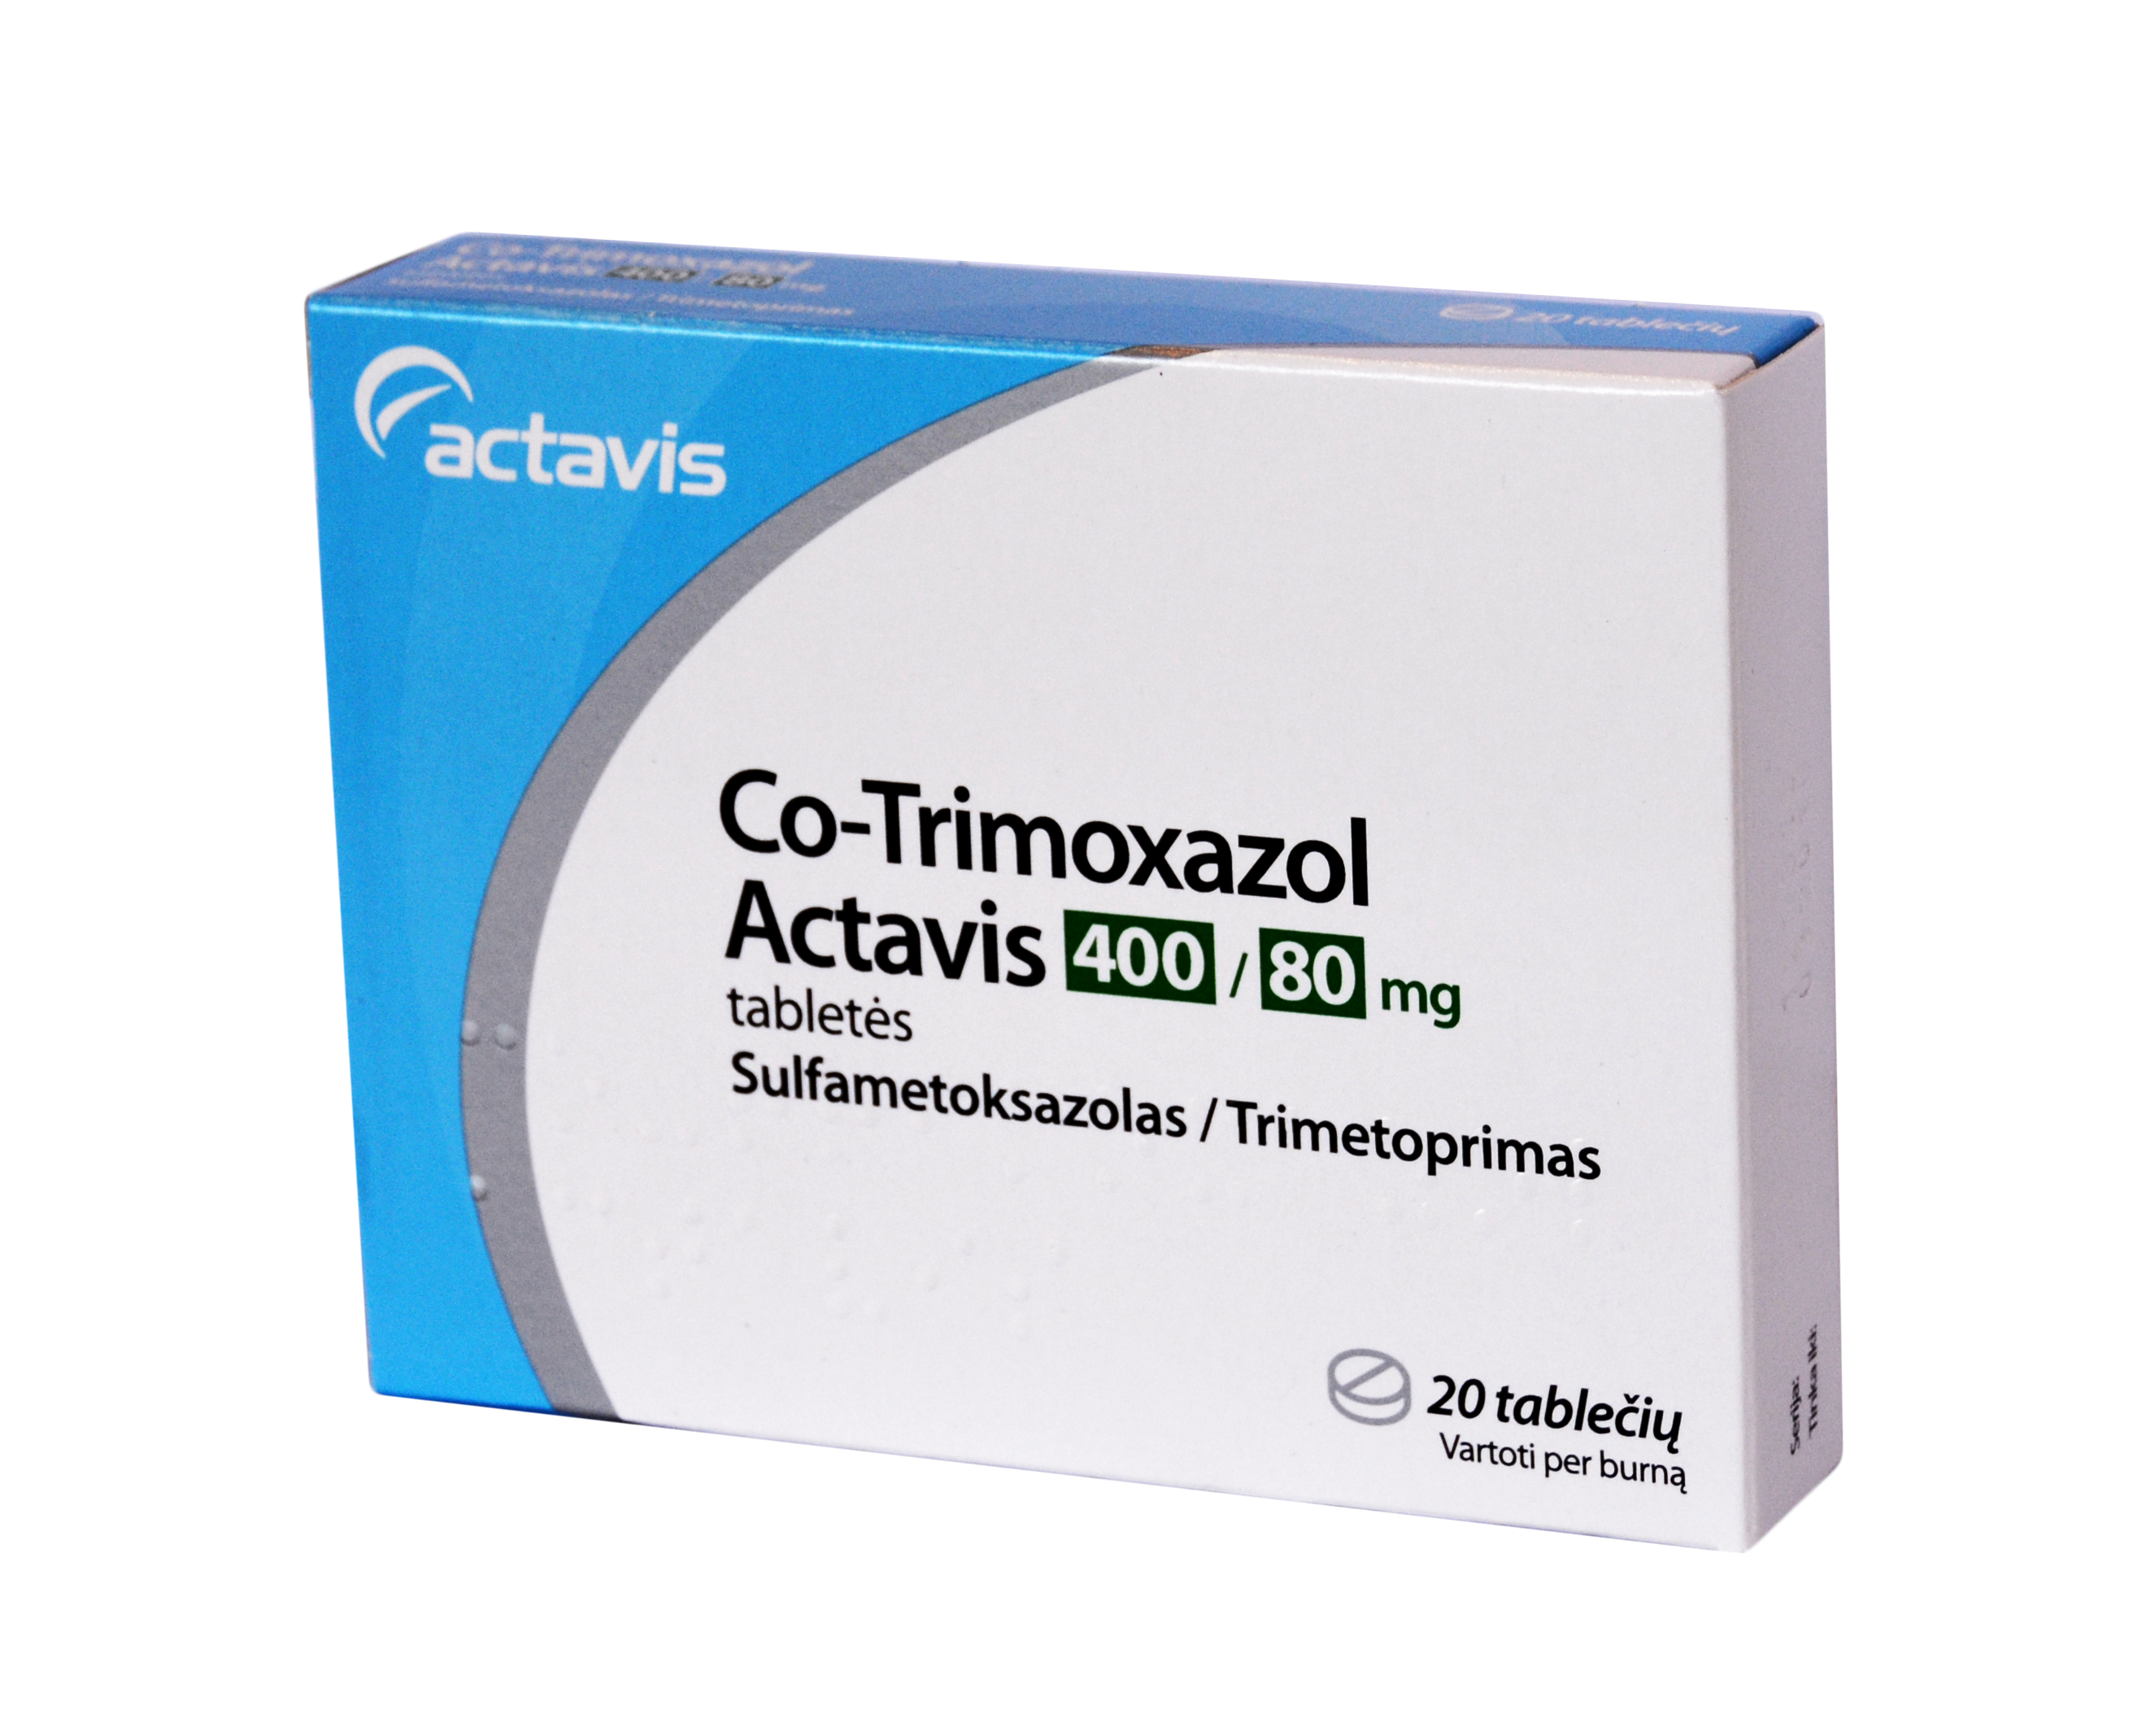 Повтори какие таблетки. Actavis препараты. Co-trimoxazol антибиотик. Гентамицин Актавис. Актавис лекарства.